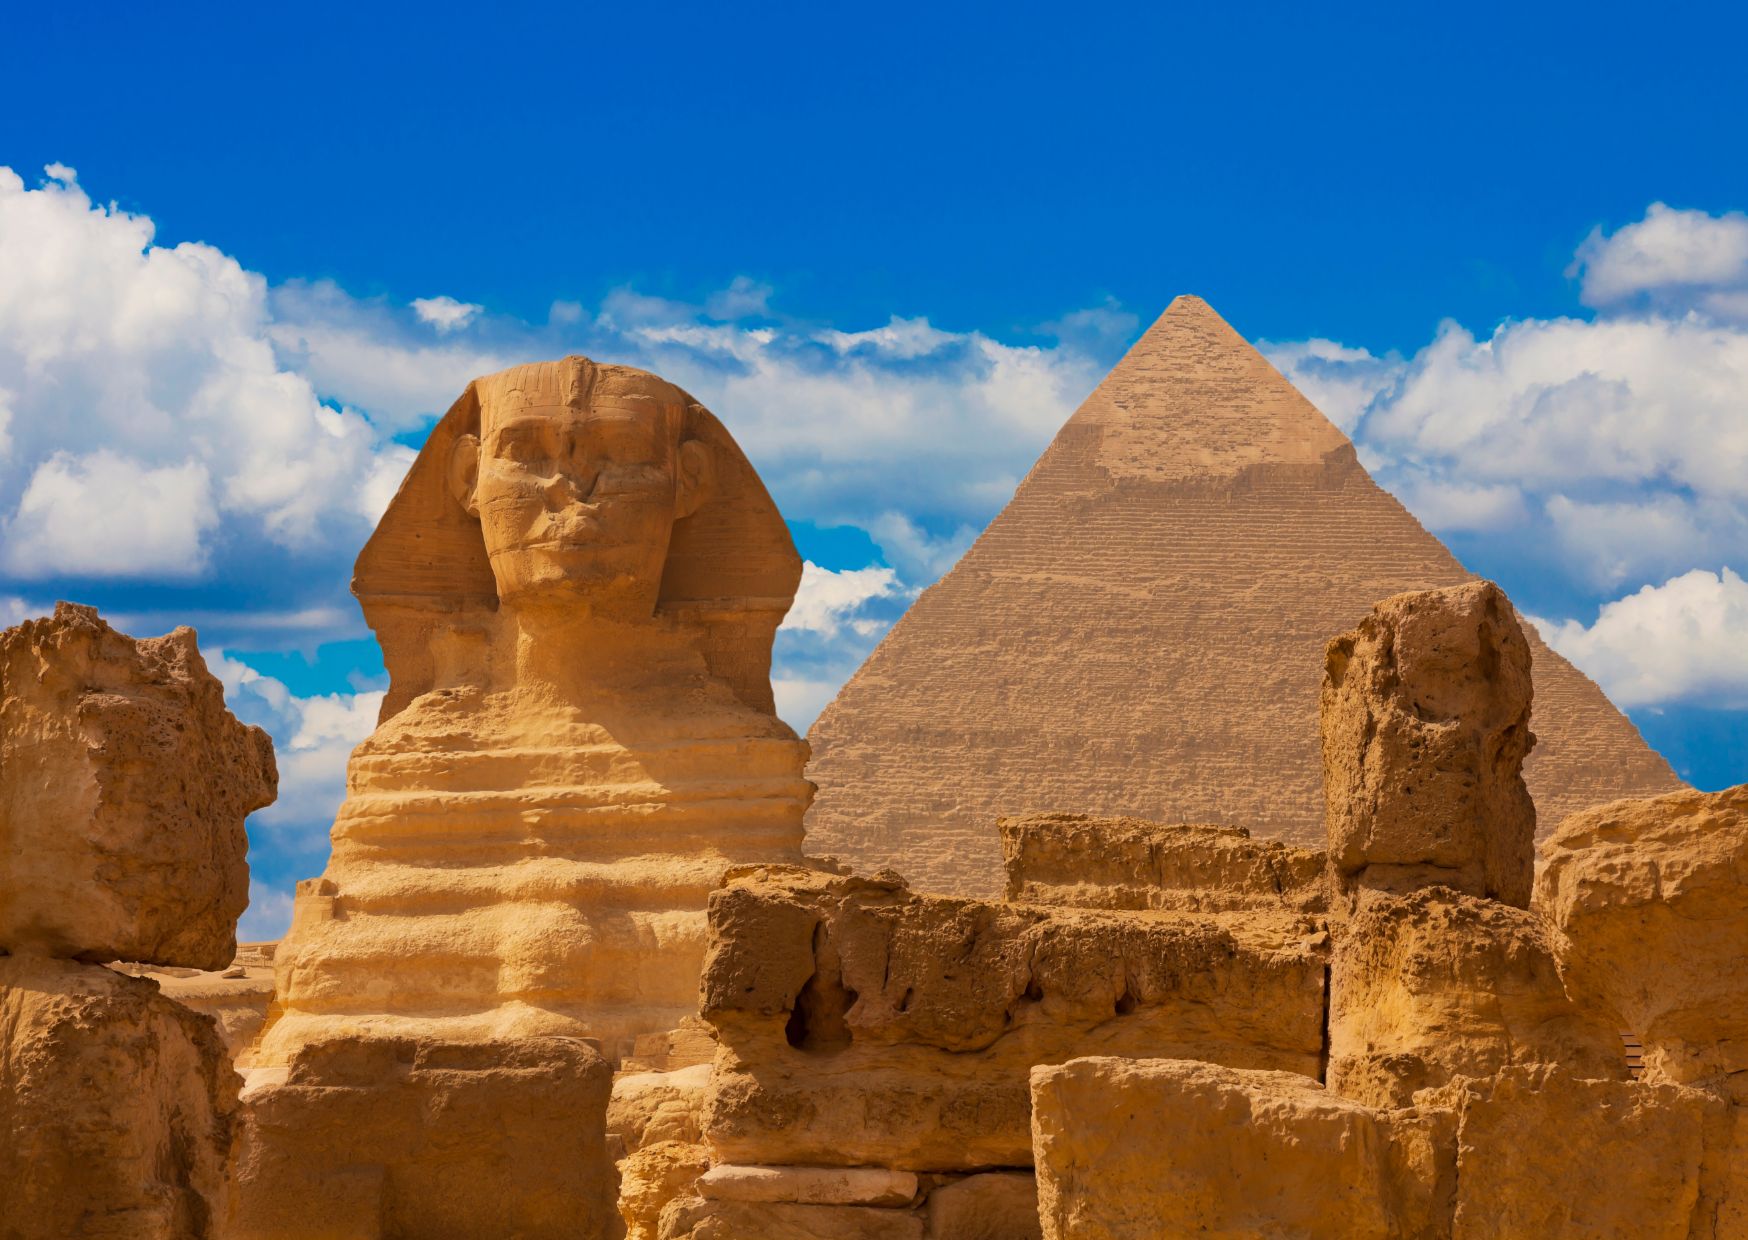 Kheopsin pyramidi ja sfinksi